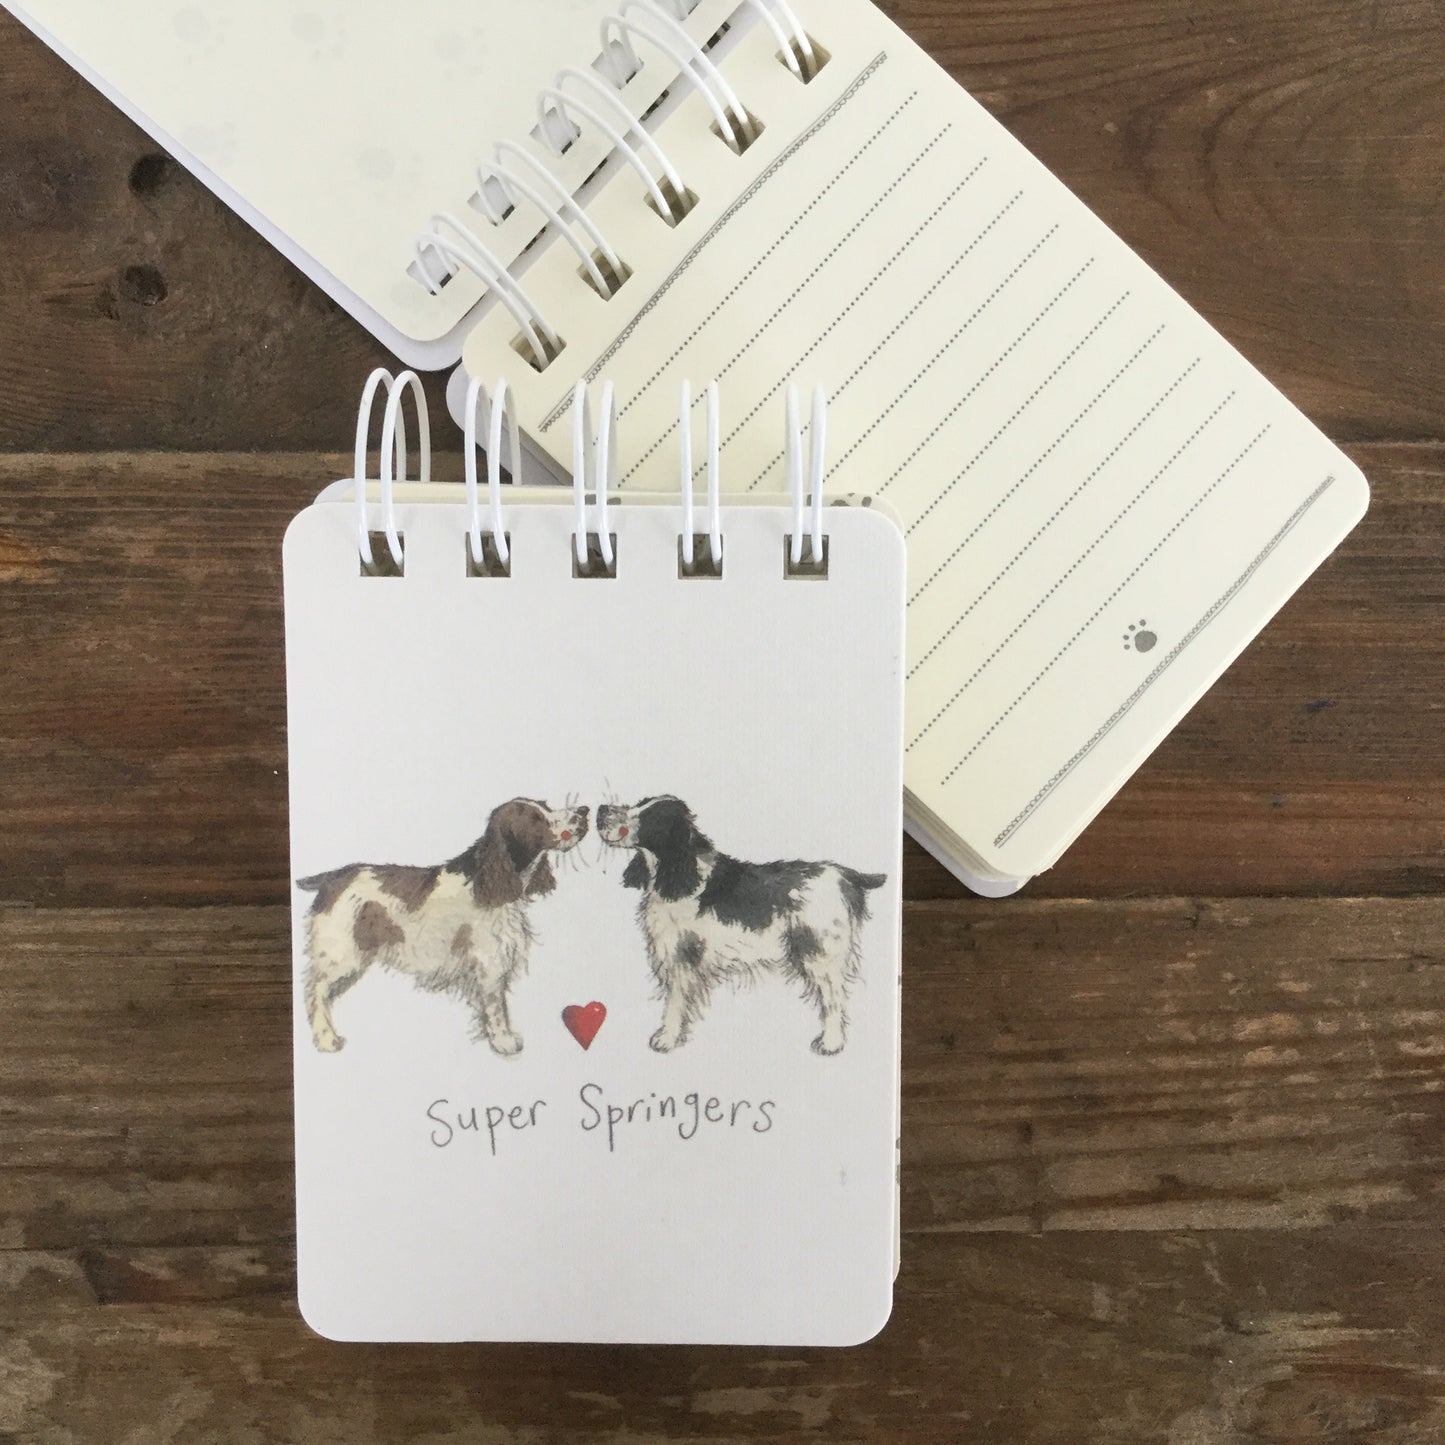 Super Springers Dog Small Spiral Bound Notepad